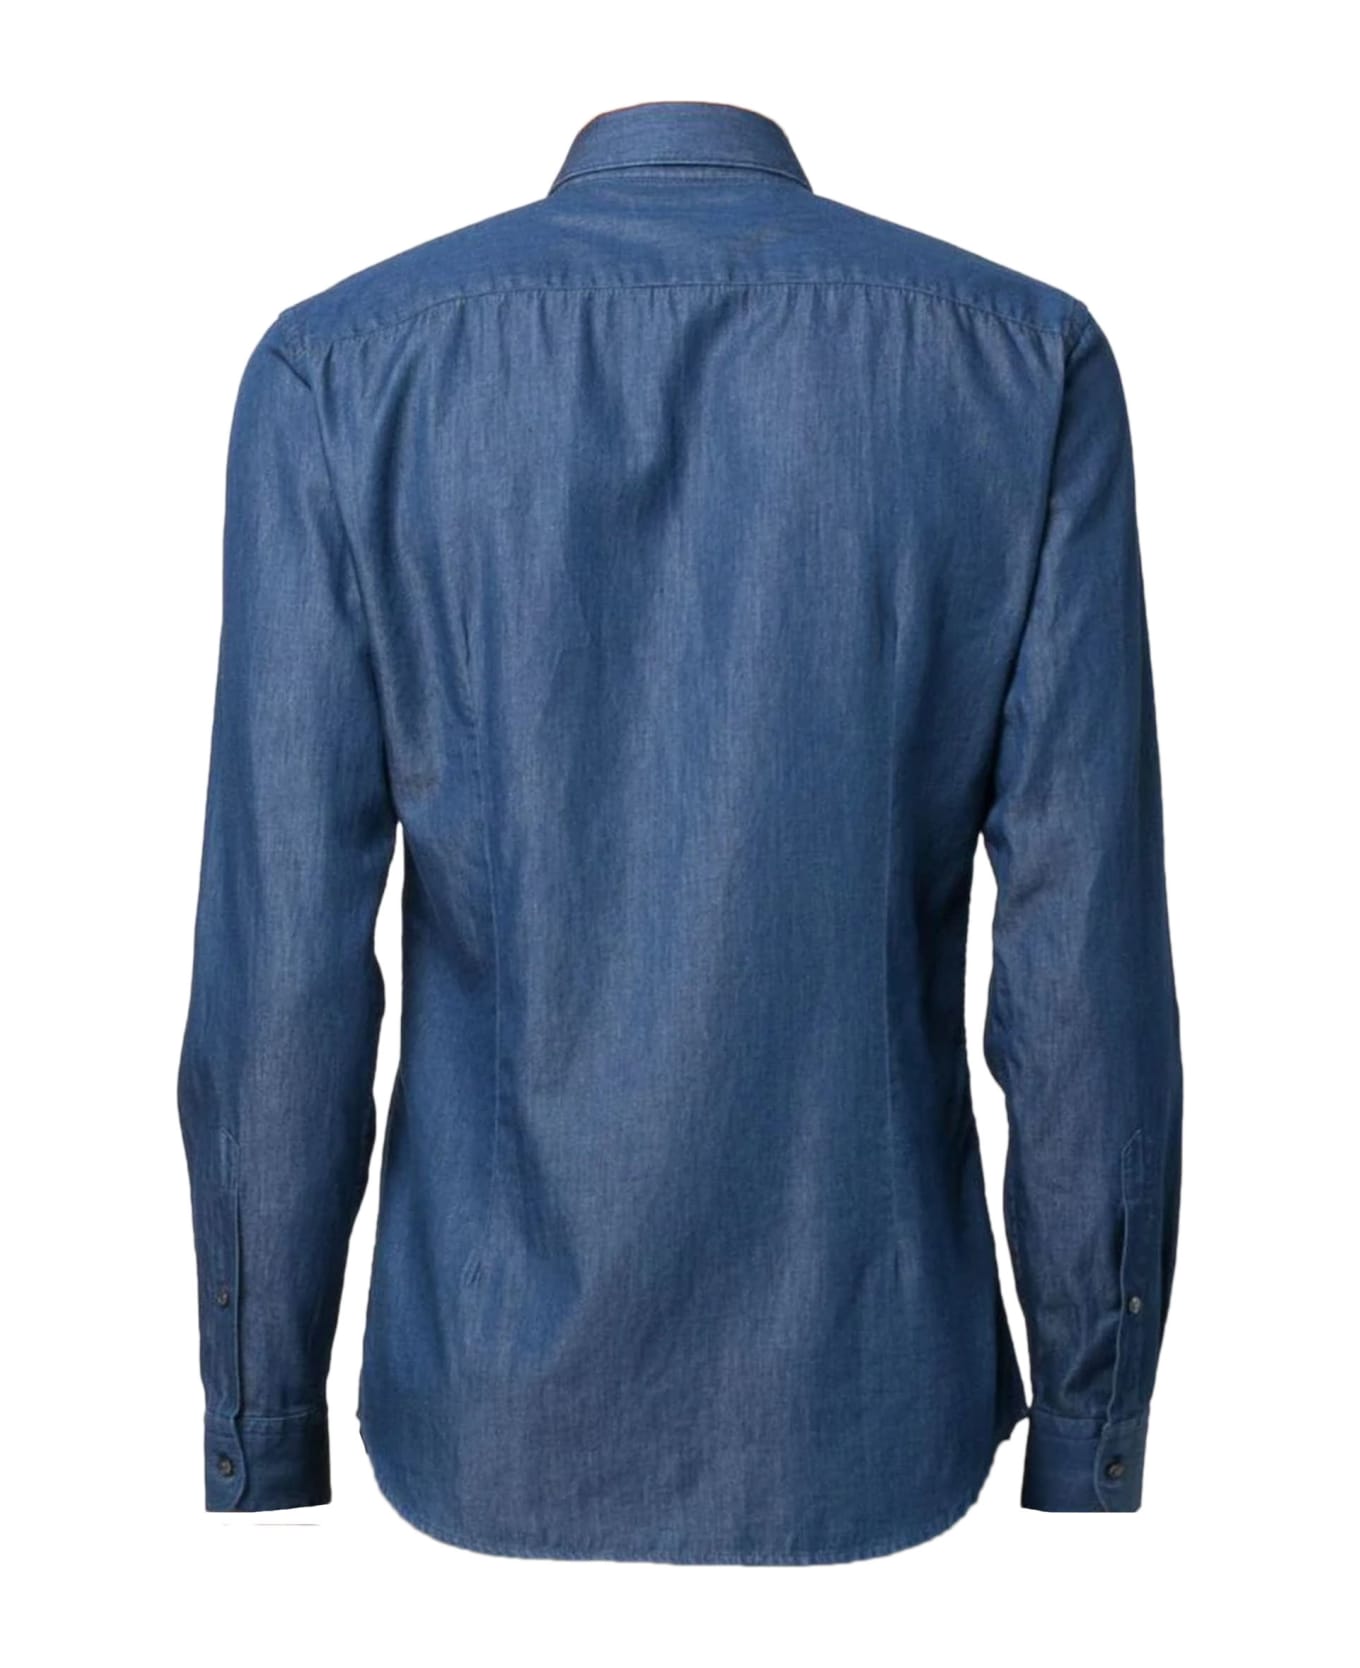 Fay Navy Blue Cotton Denim Shirt - Blue